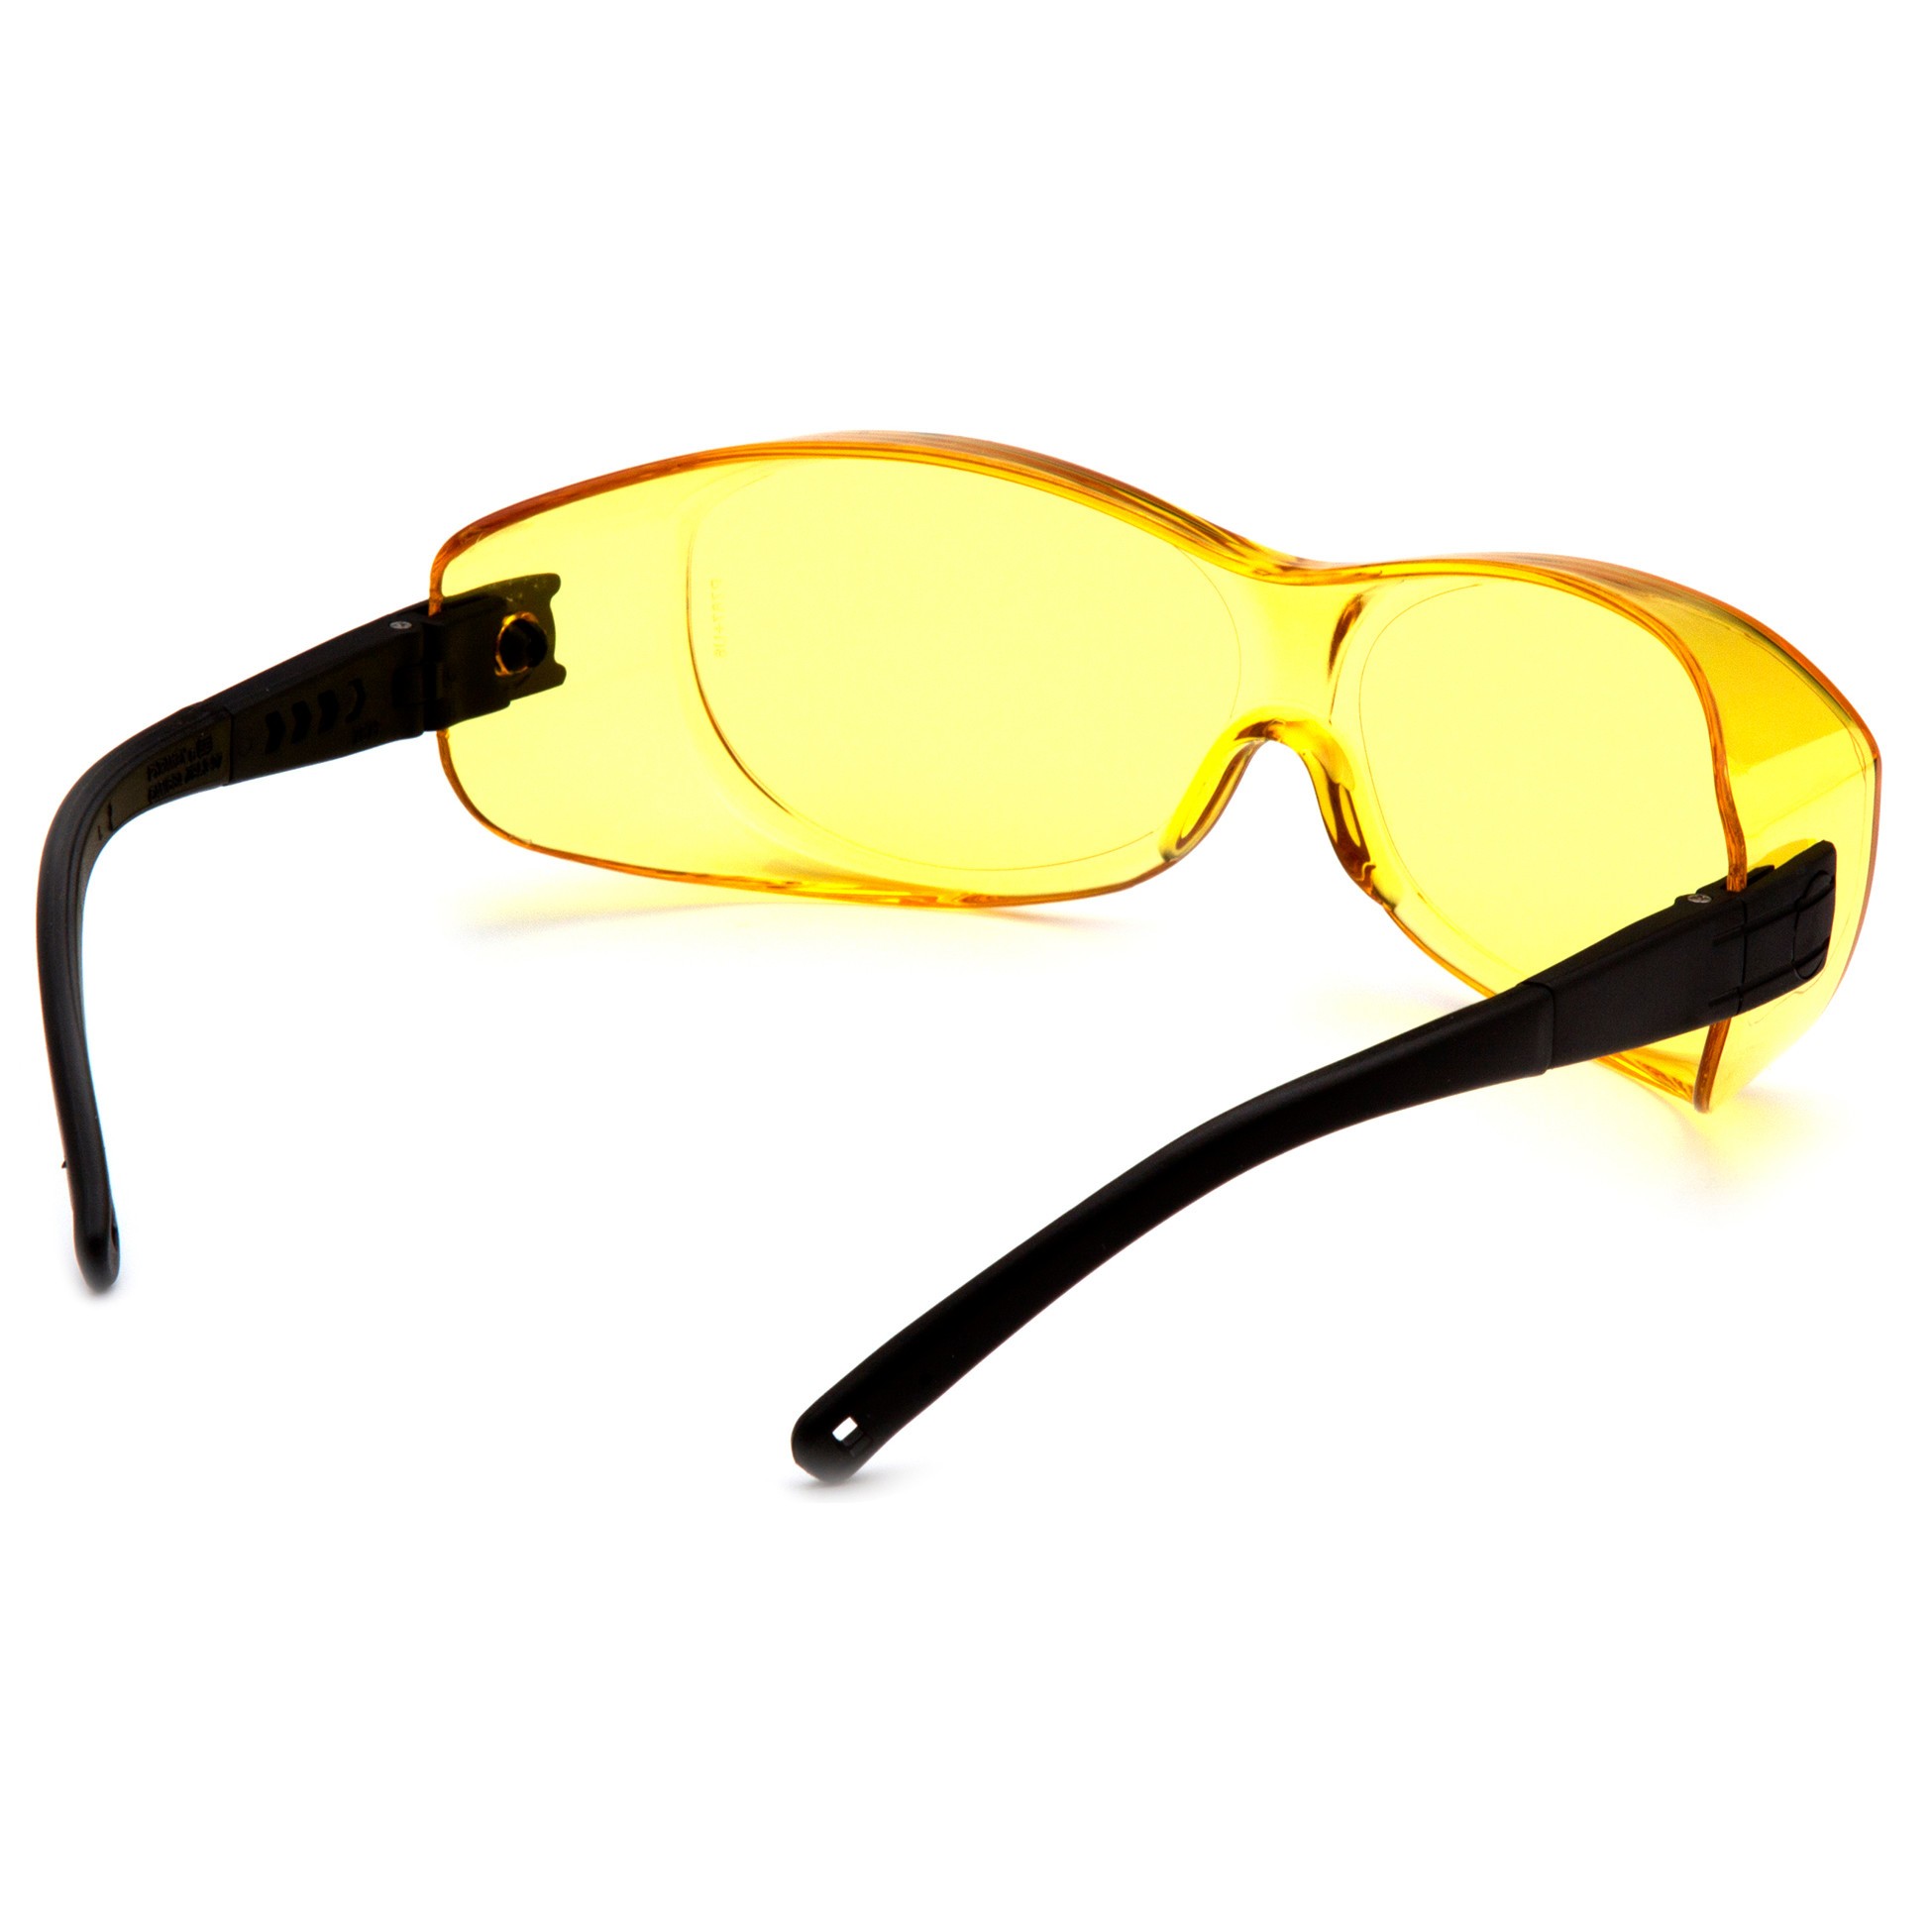 Pyramex OTS Over Prescription Glasses Safety Glasses Black Frame/Amber Lens One Size S3530SJ 